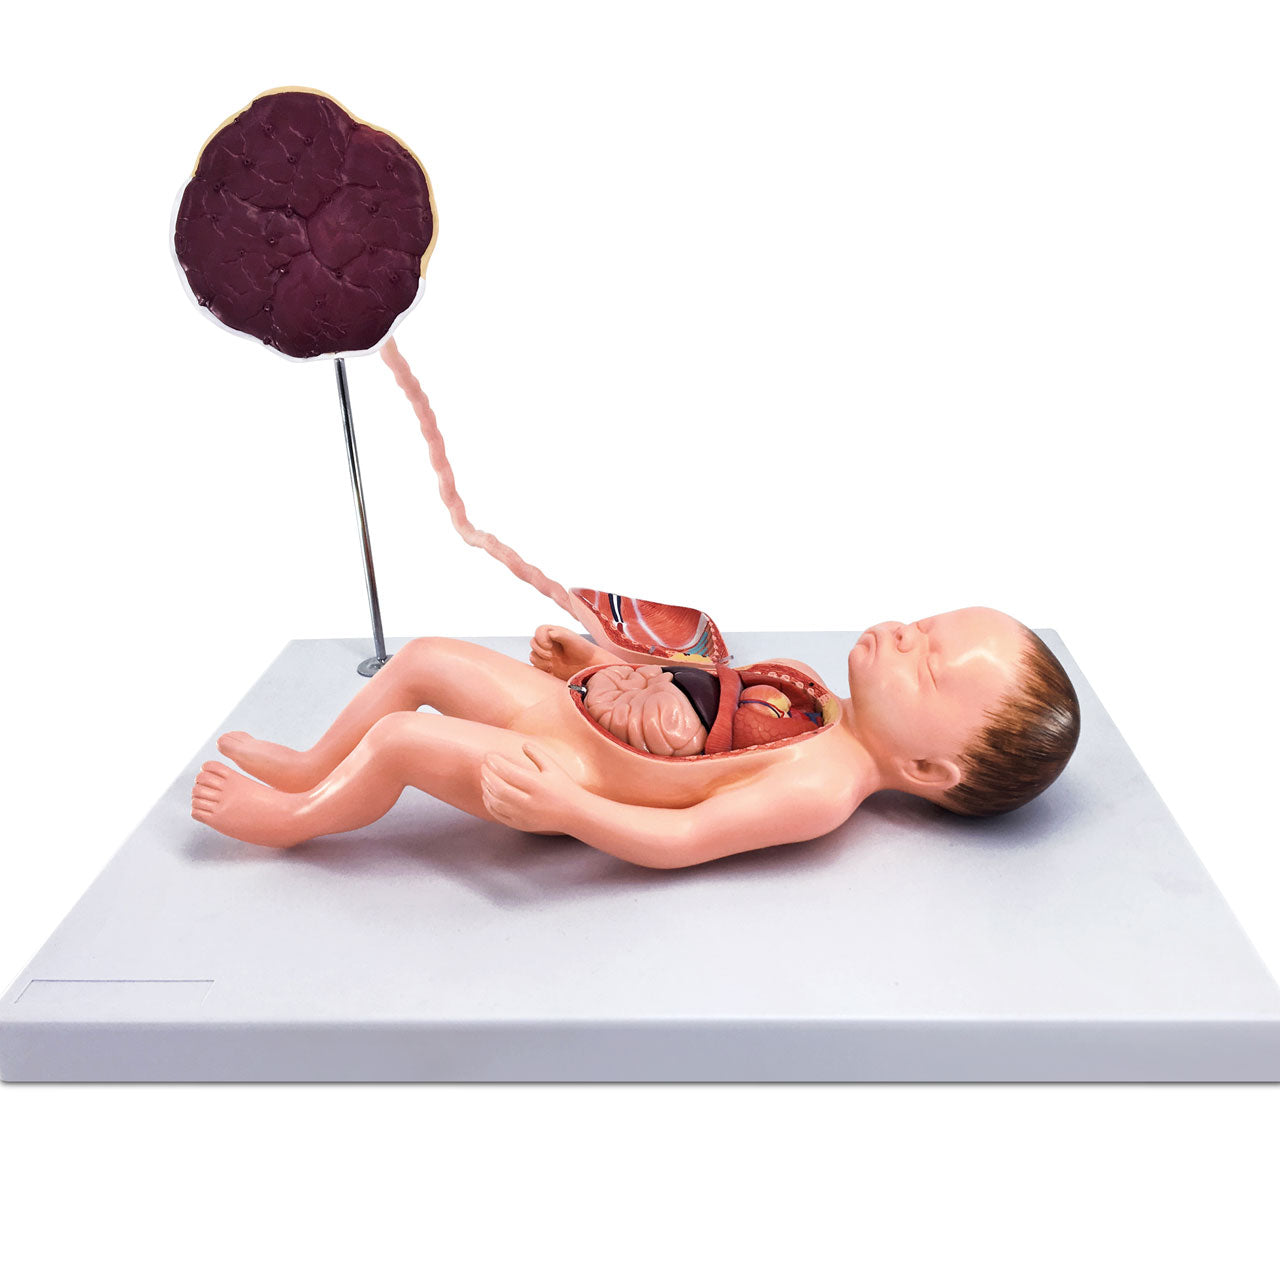 Evotech Scientific Neonatal Internal Organs Anatomy Model Placenta Umbilical Cord Birth Model